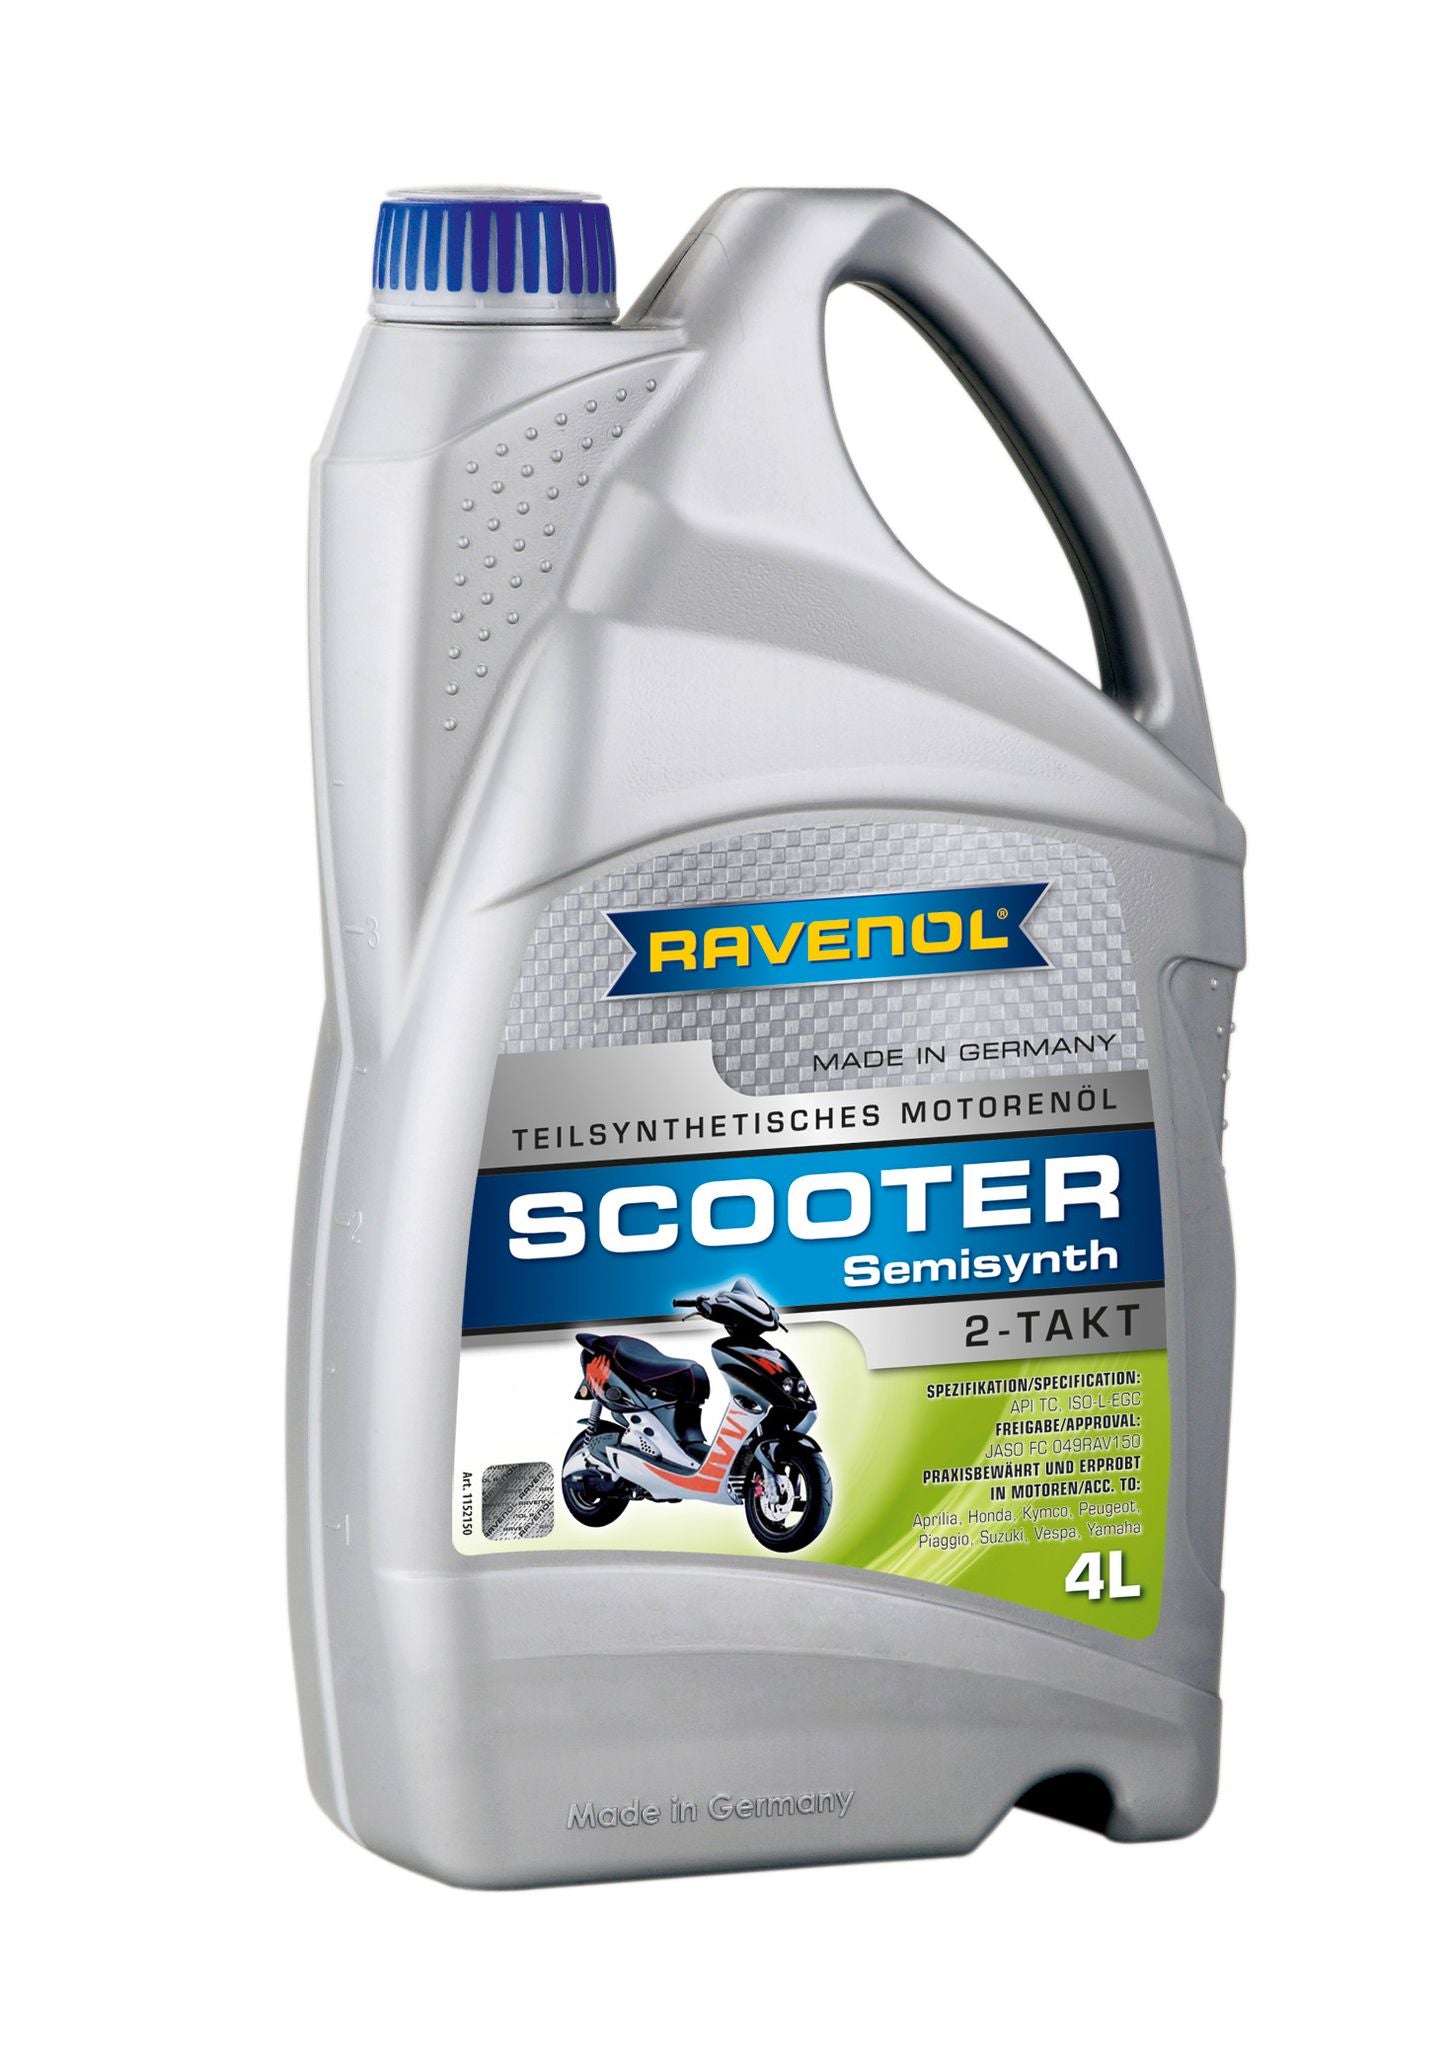 Ravenol Scooter 2-Taktöl Fullsynthetic direkt im Ravenol Shop kaufen